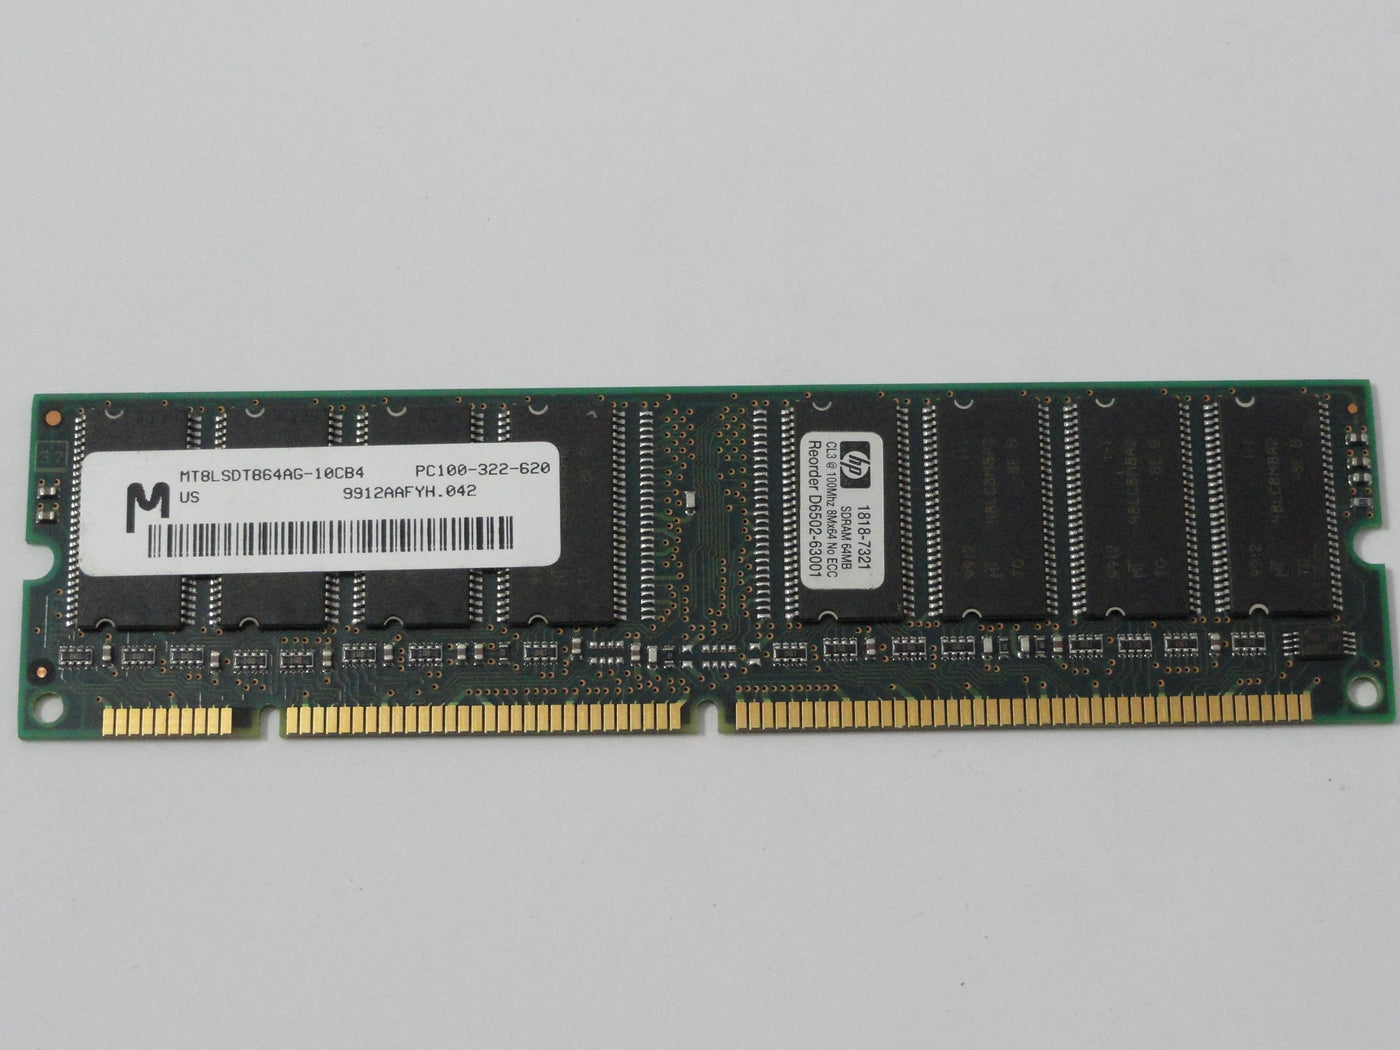 MC6593_MT8LSDT864AG-10CB4_64MB PC100-322-620 SDRAM DIMM - Image2